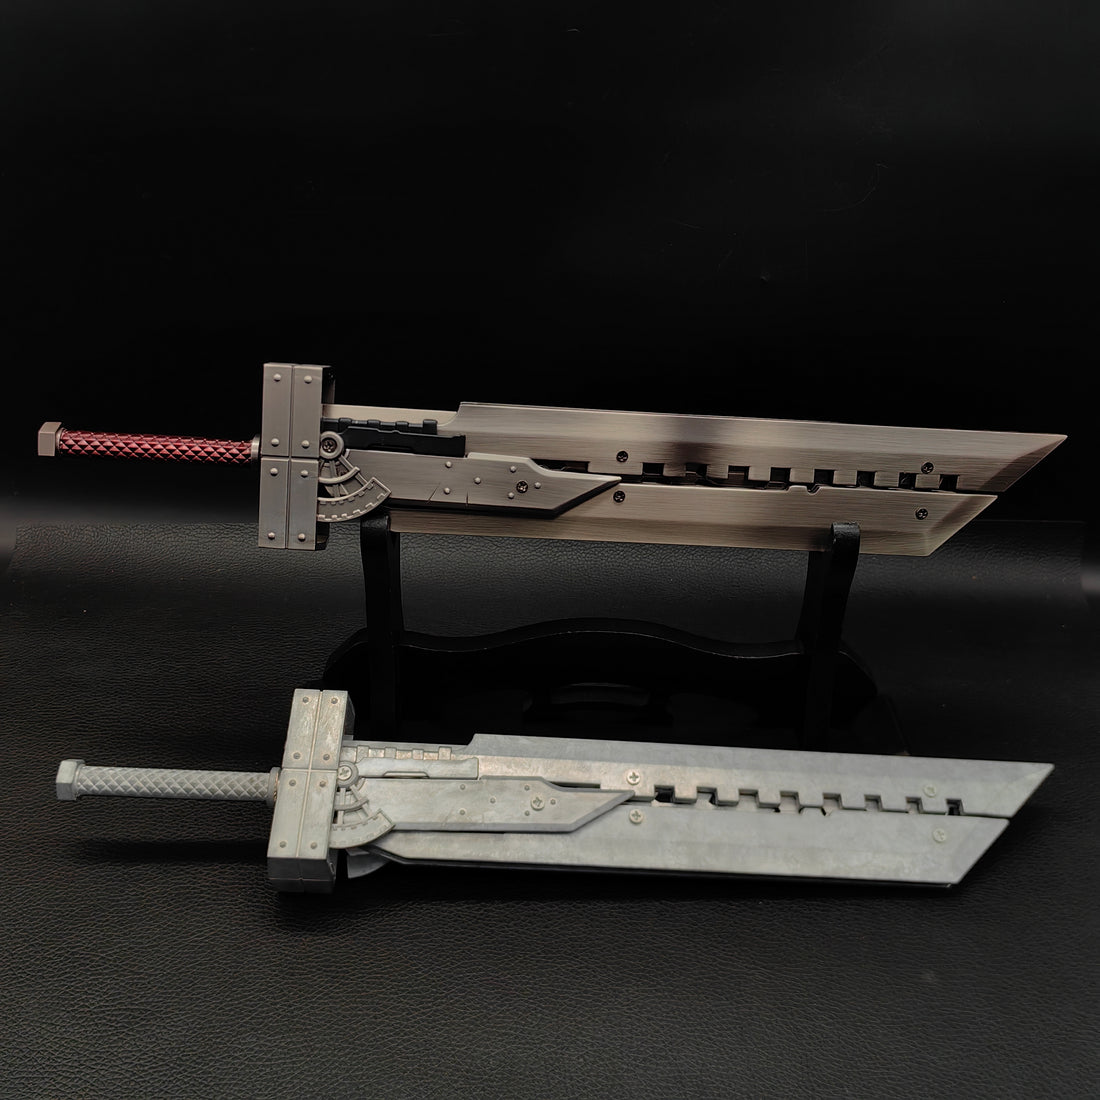 Cloud Fusion Sword Metal Replica: The Dream Treasure for Every Collector"